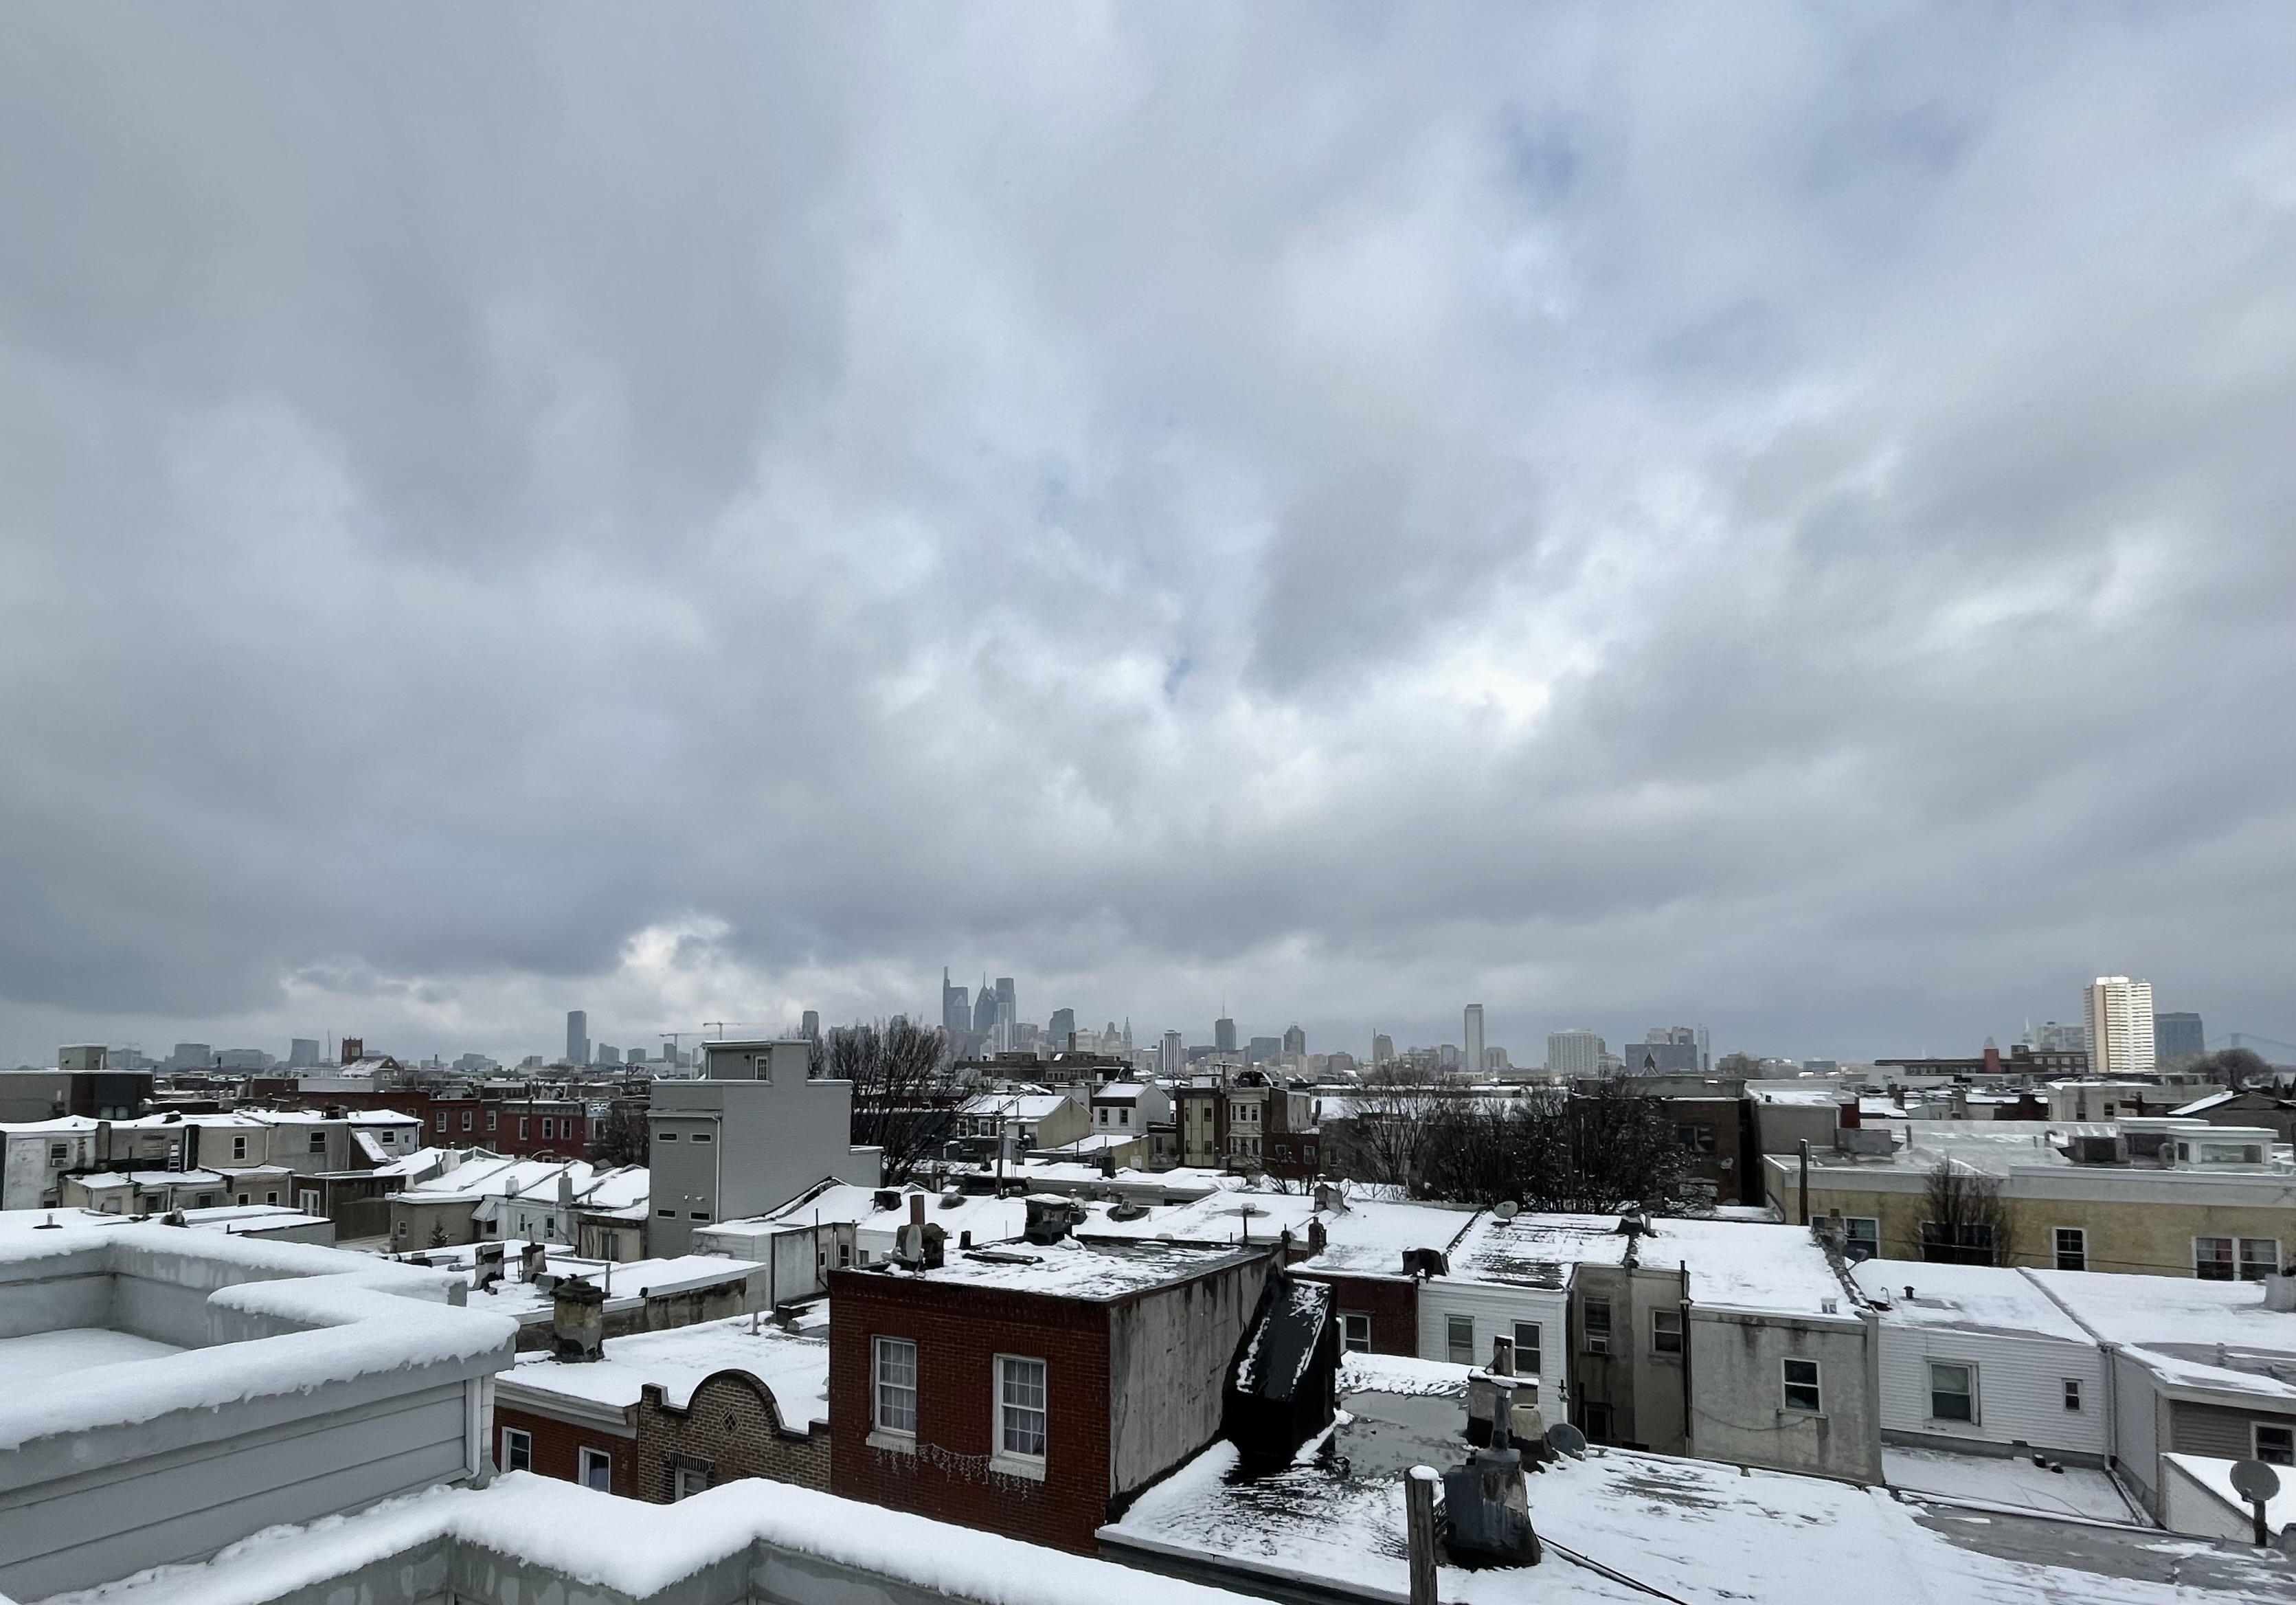 A snowy view of Philadelphia